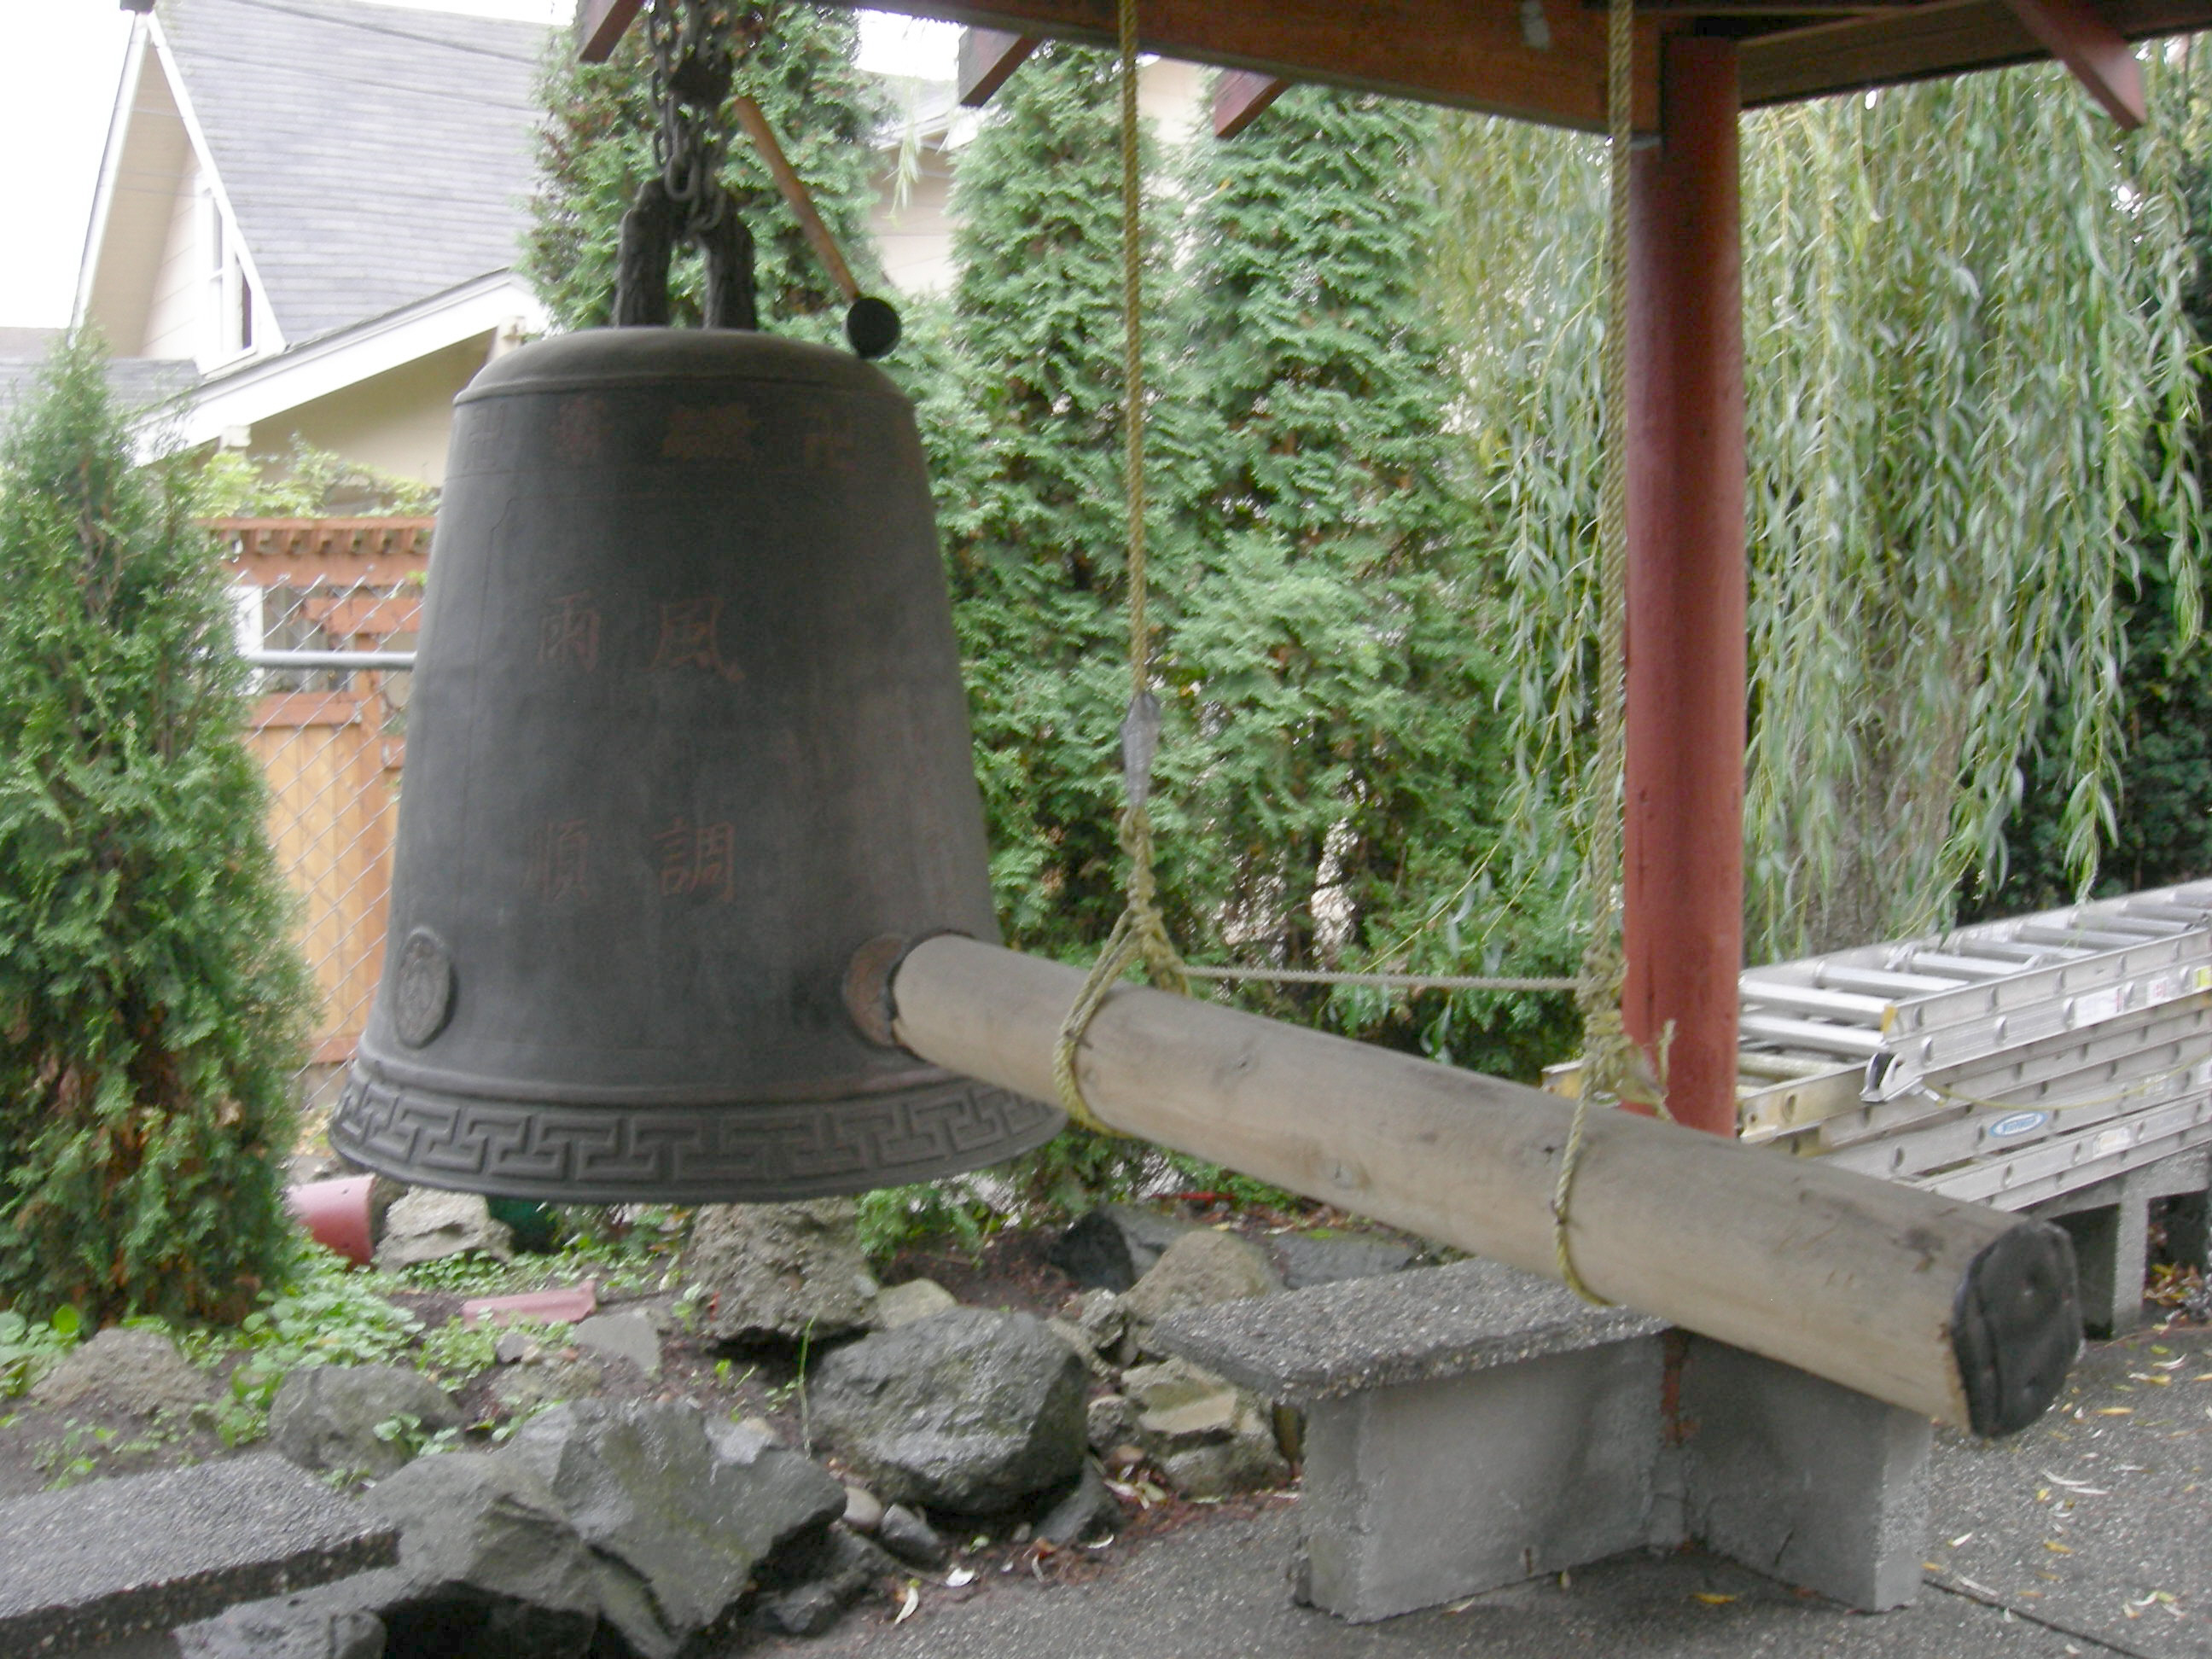 File:Seattle - Viet Nam Buddhist Temple bell 01.jpg - Wikimedia Commons